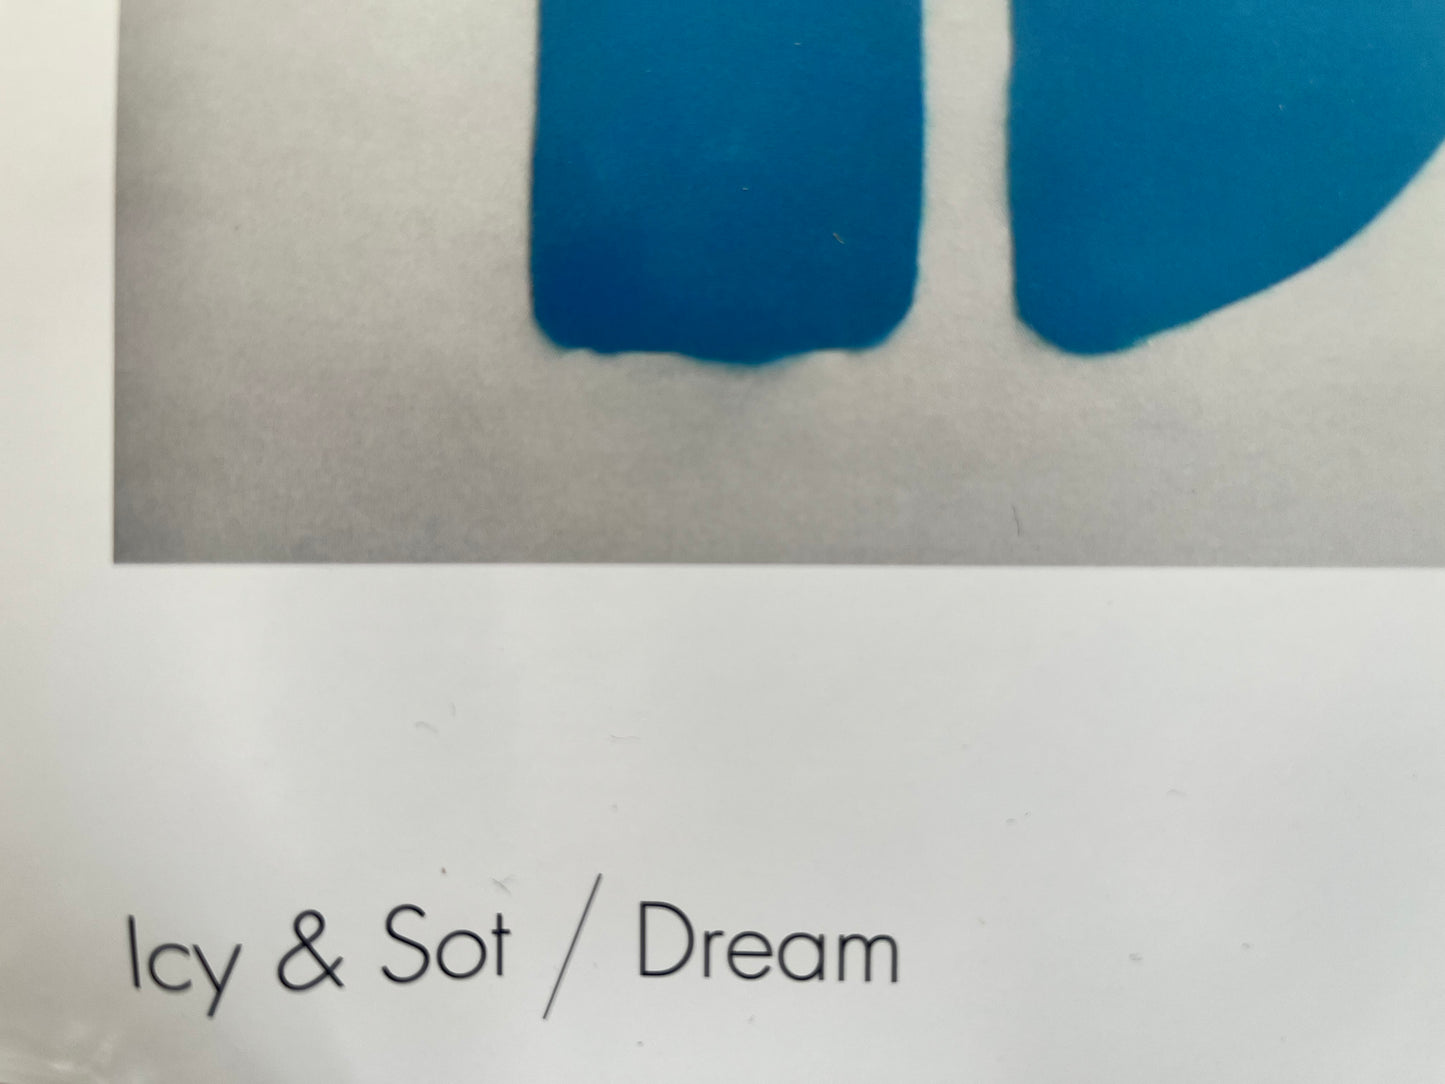 Offset screen print - Icy & Sot x MocoMuseum - Dream